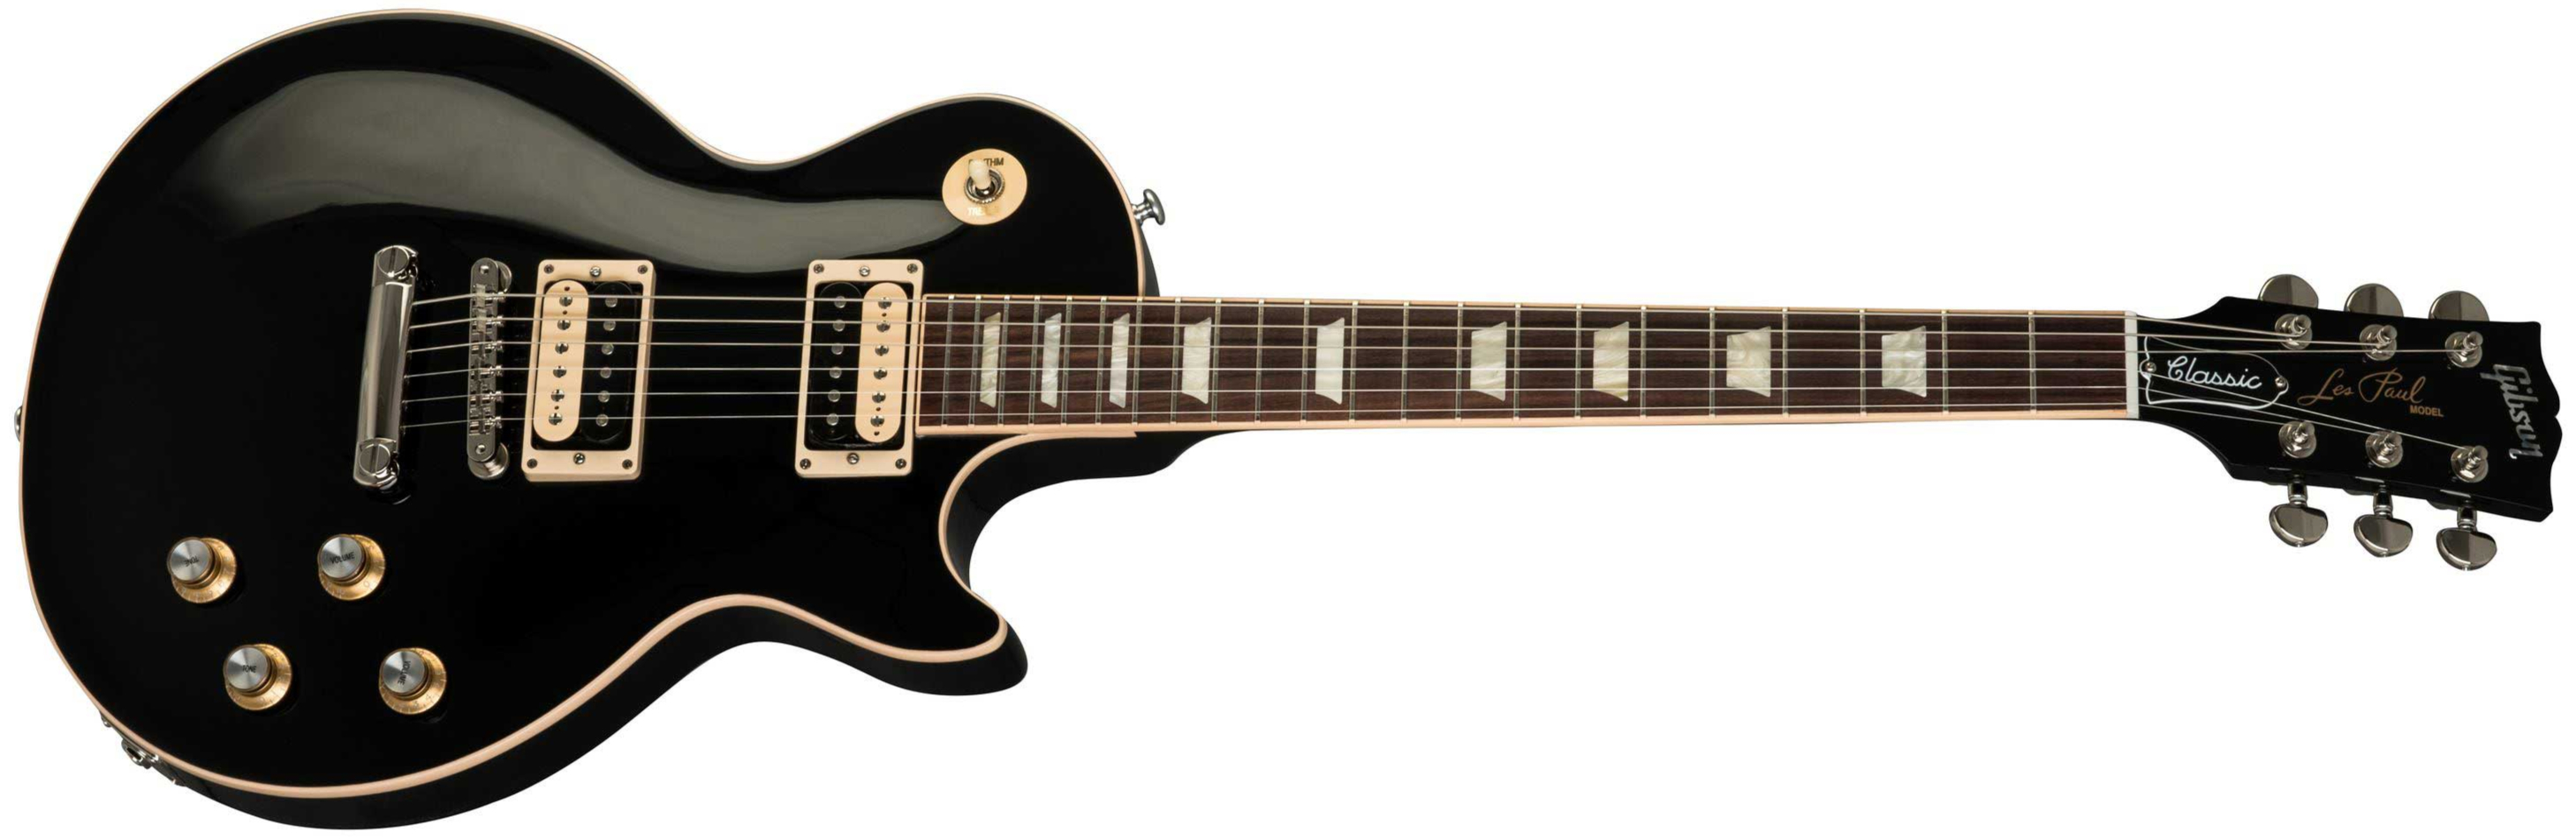 Gibson Les Paul Classic Ebony | MUSIC STORE professional